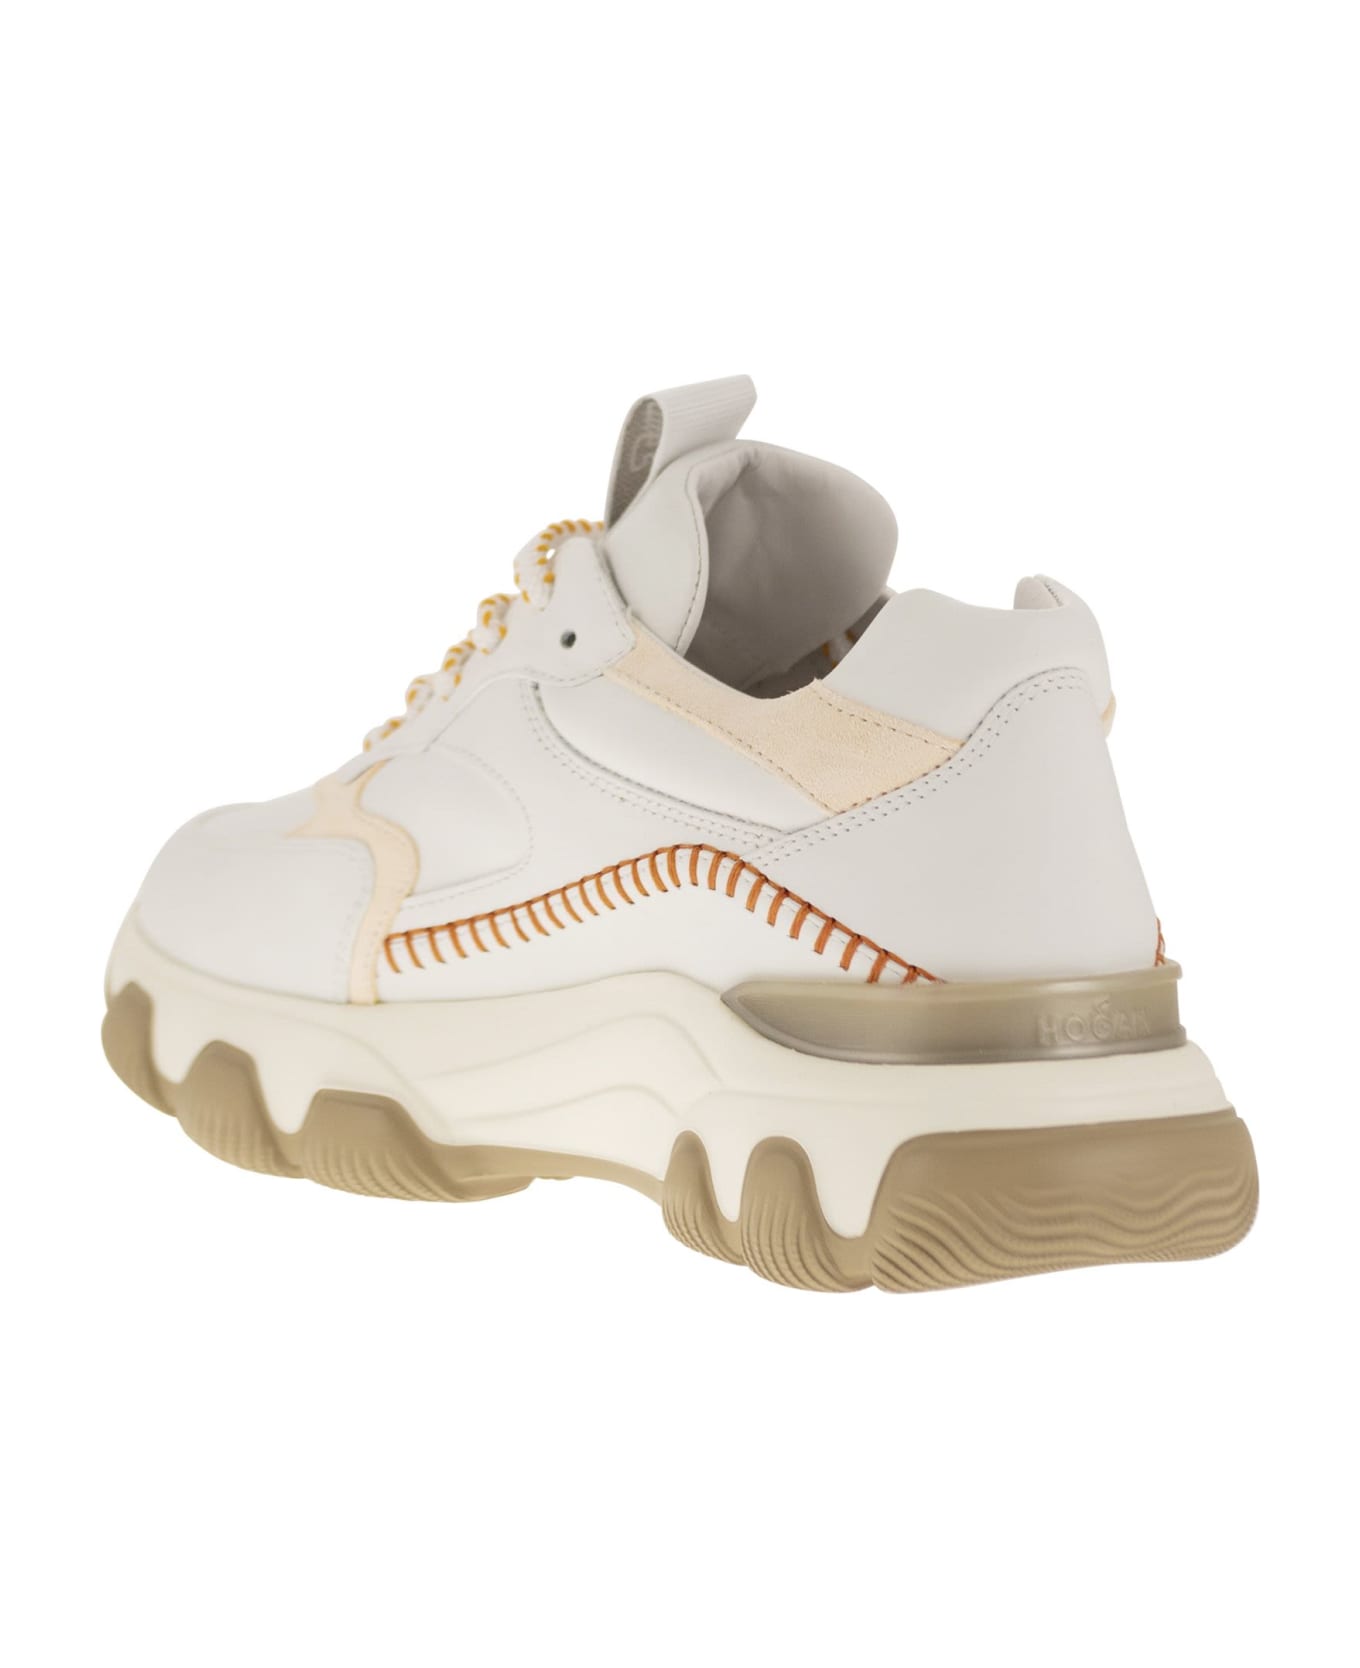 Hogan Sneakers Hyperactive - White/orange スニーカー